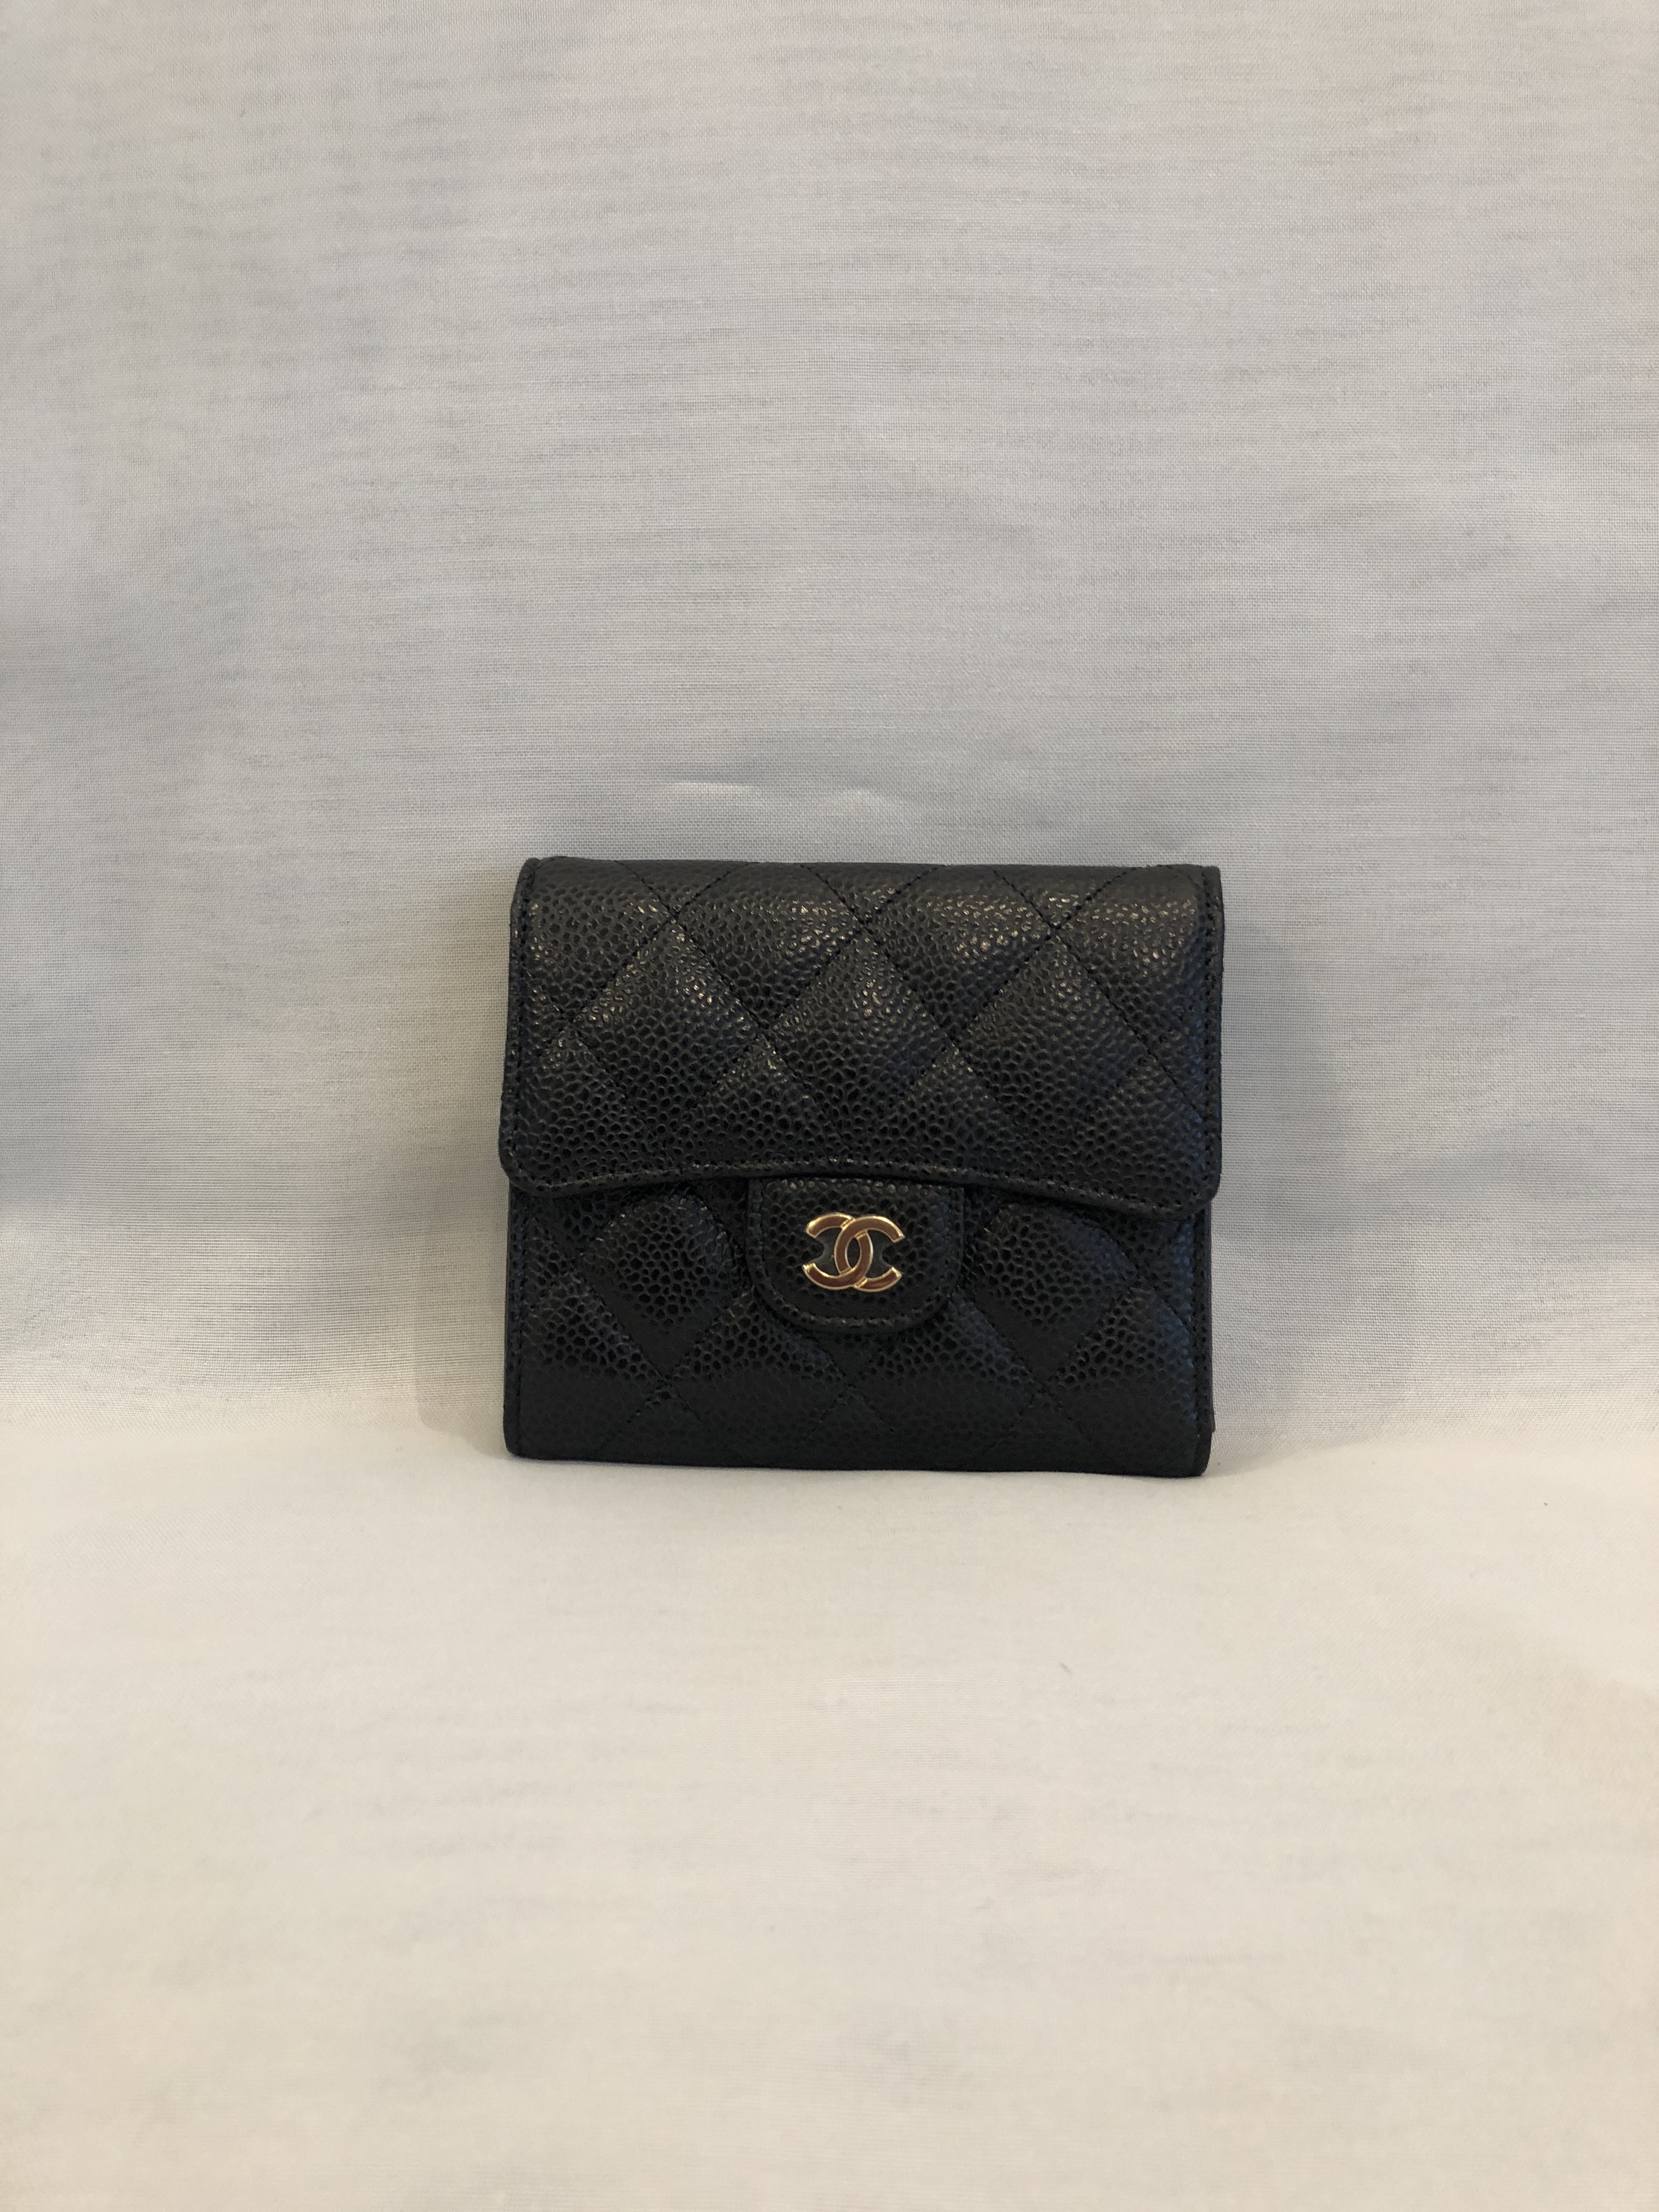 Chanel classic Caviar Wallet